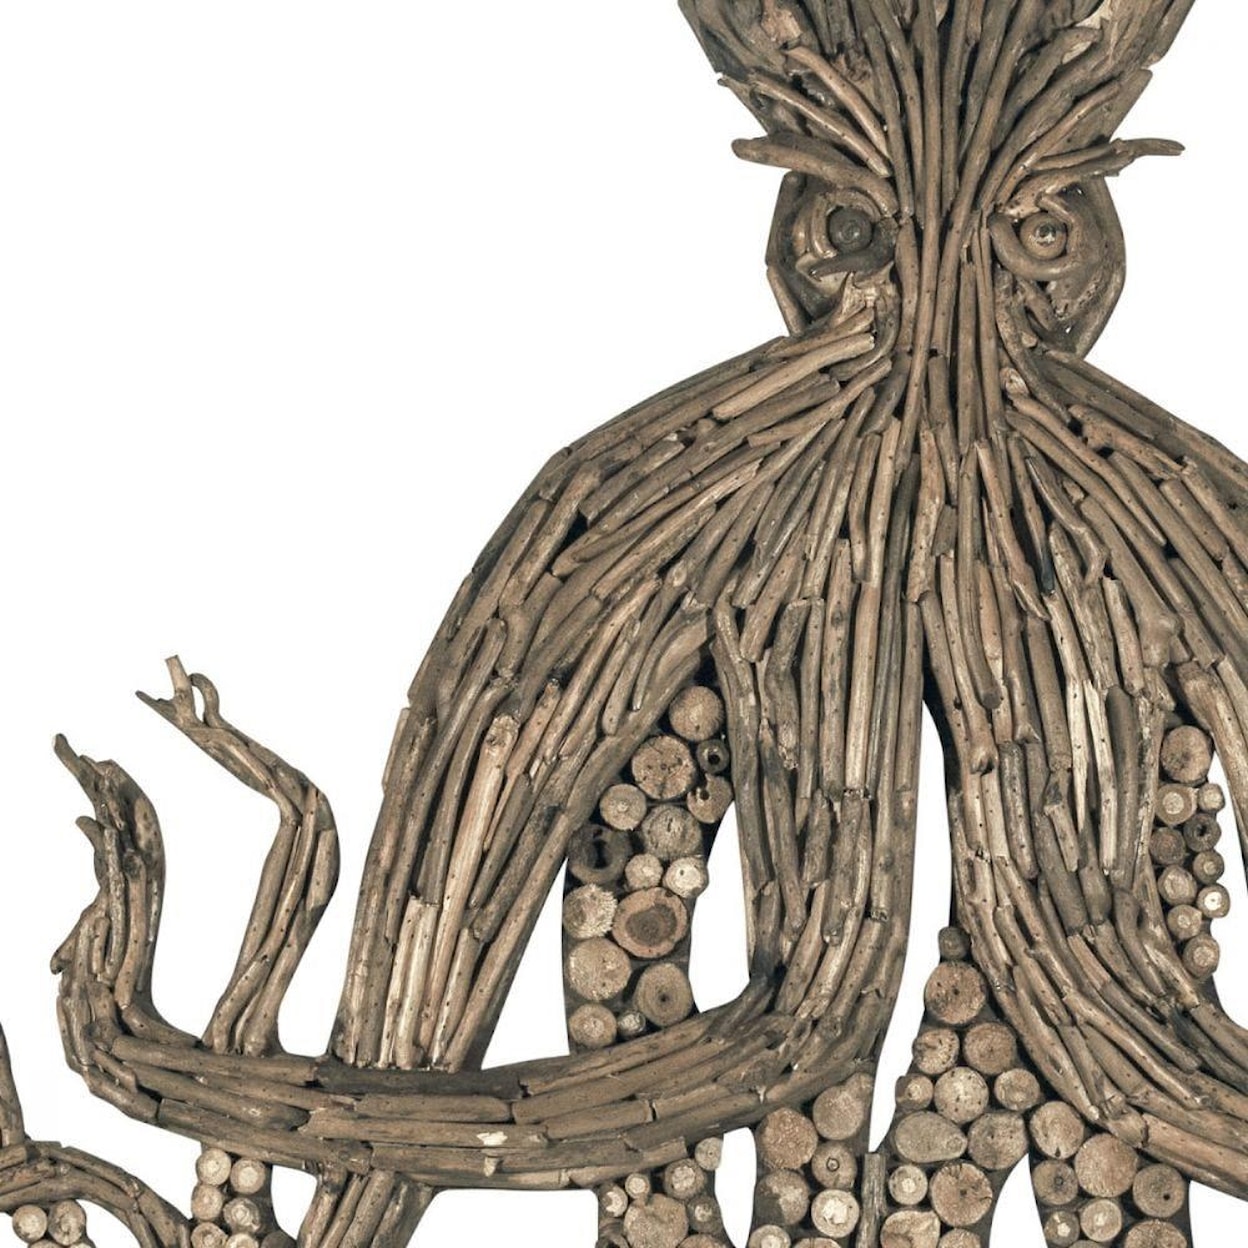 Ibolili Wall Art Driftwood Octopus